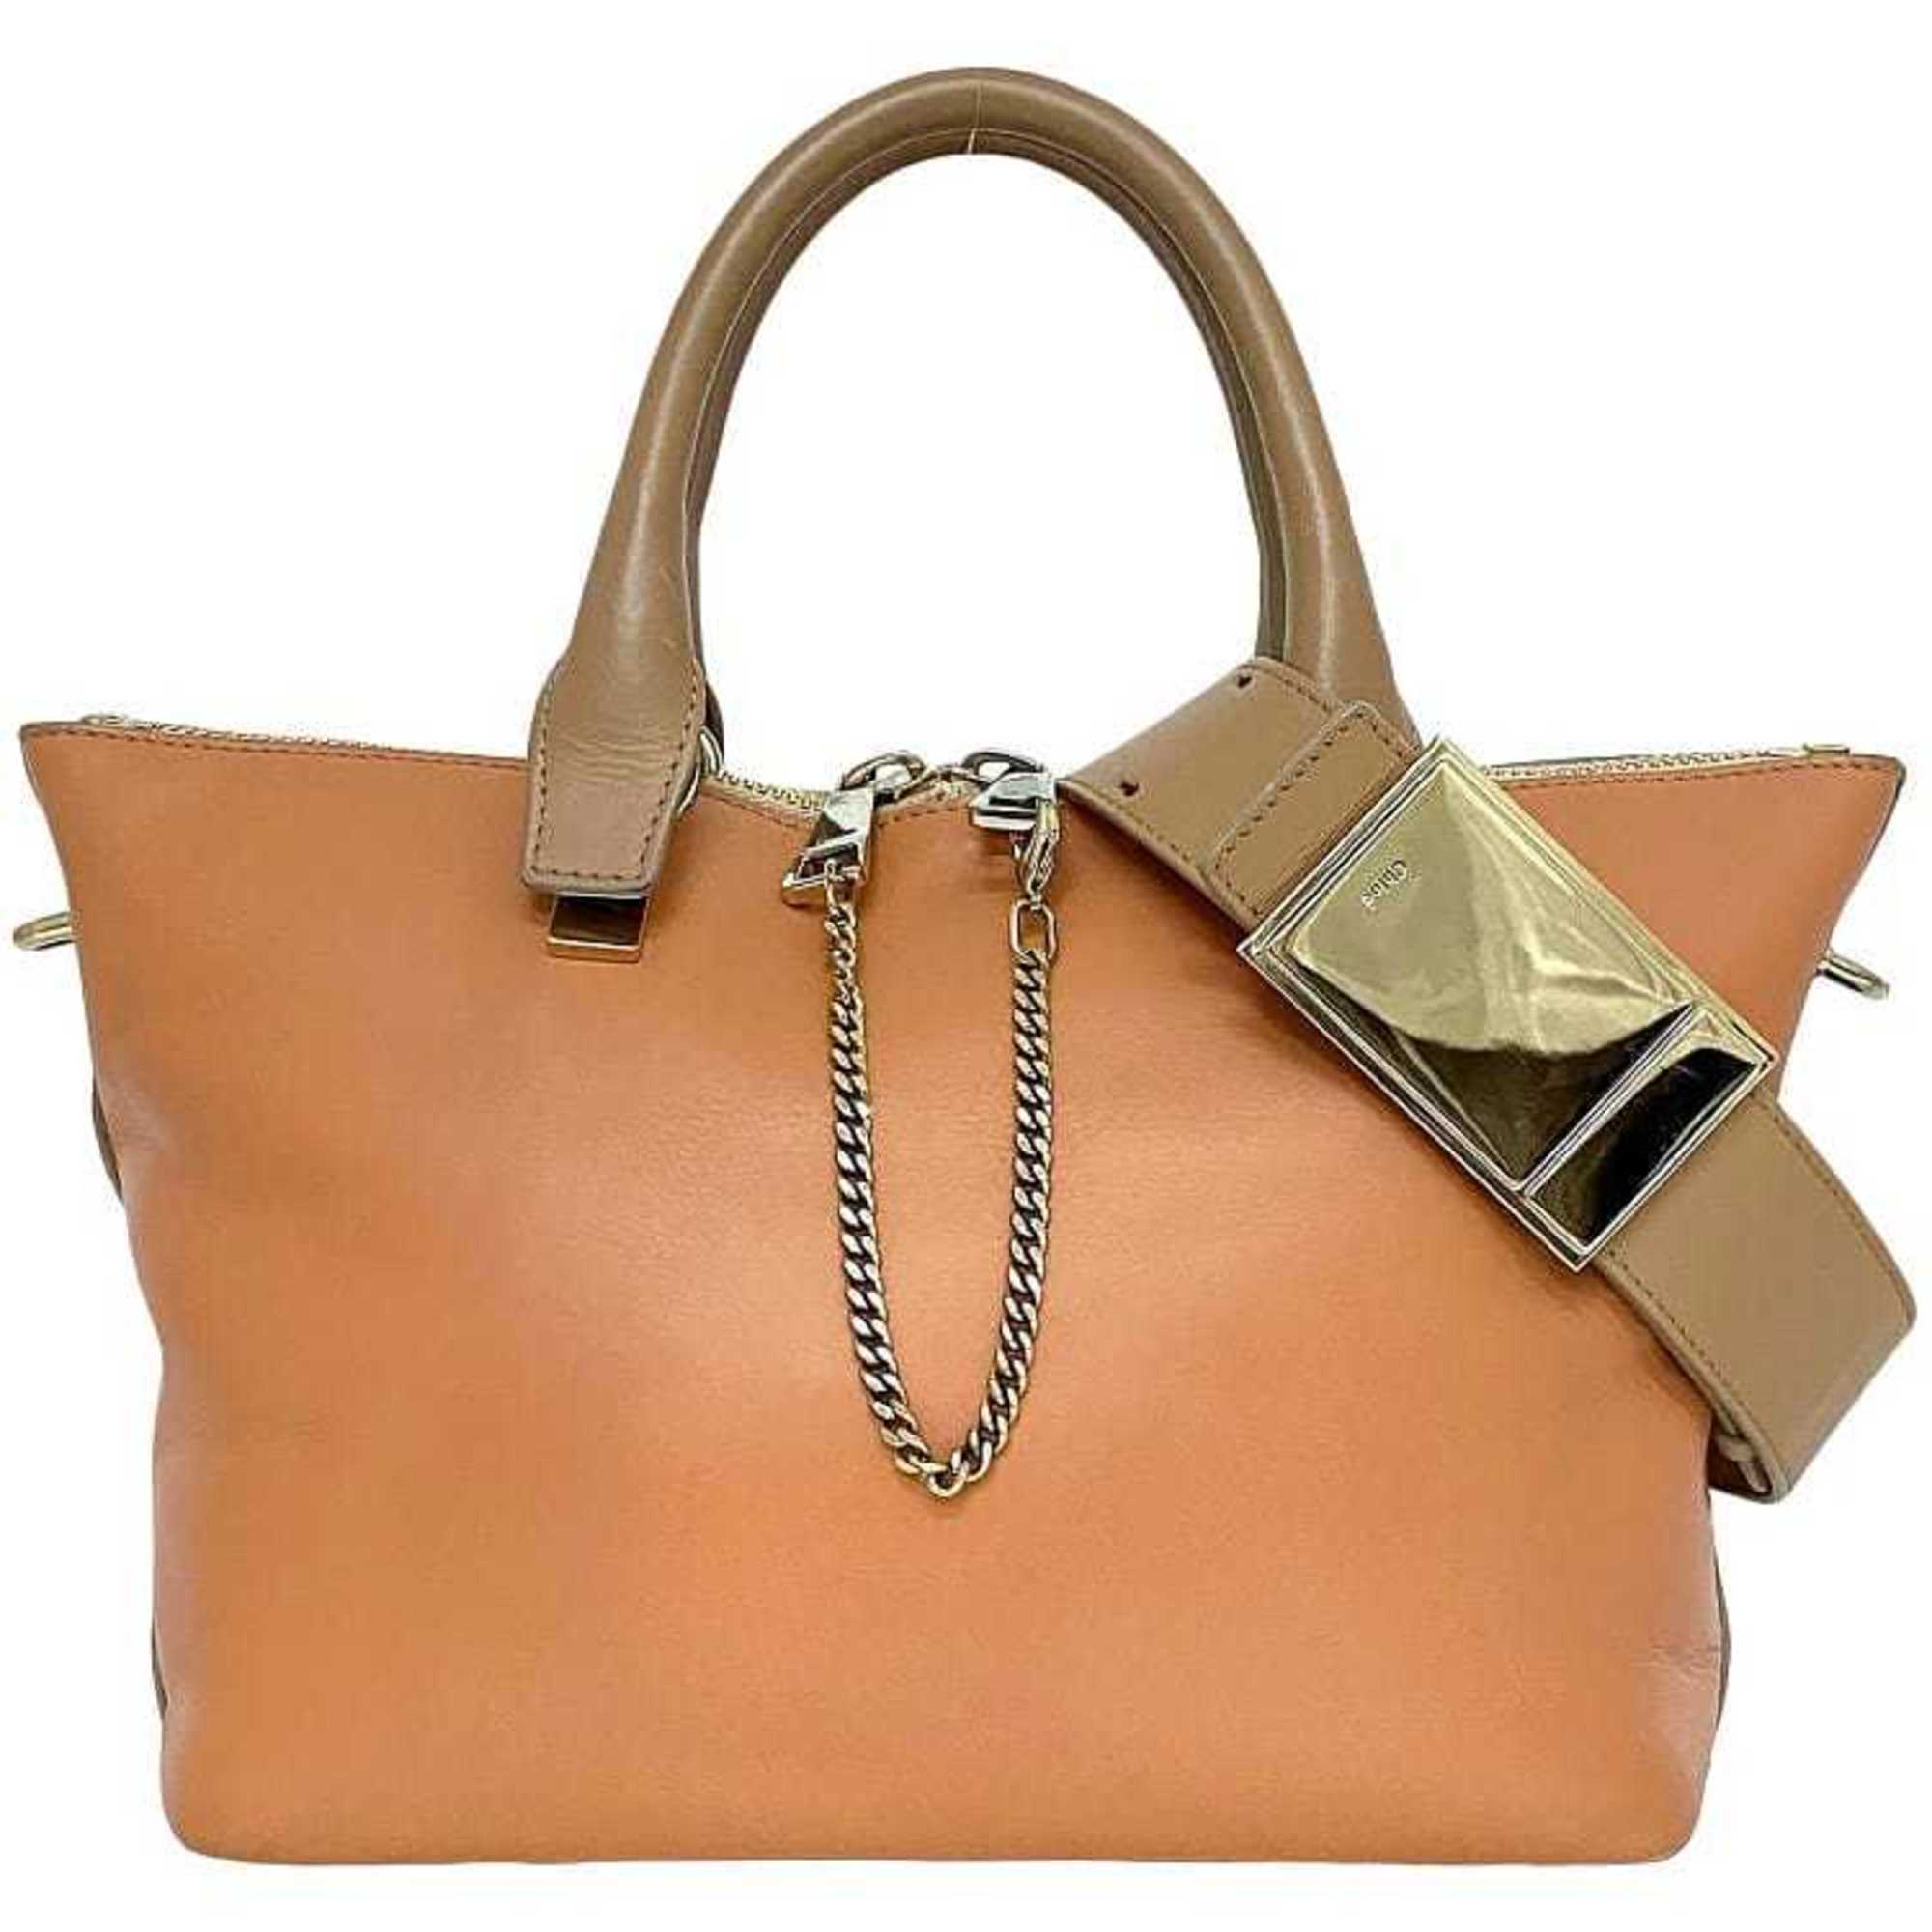 Chloé Chloe 2-way bag beige salmon pink ec-20561 shoulder leather handbag thick strap bicolor ladies